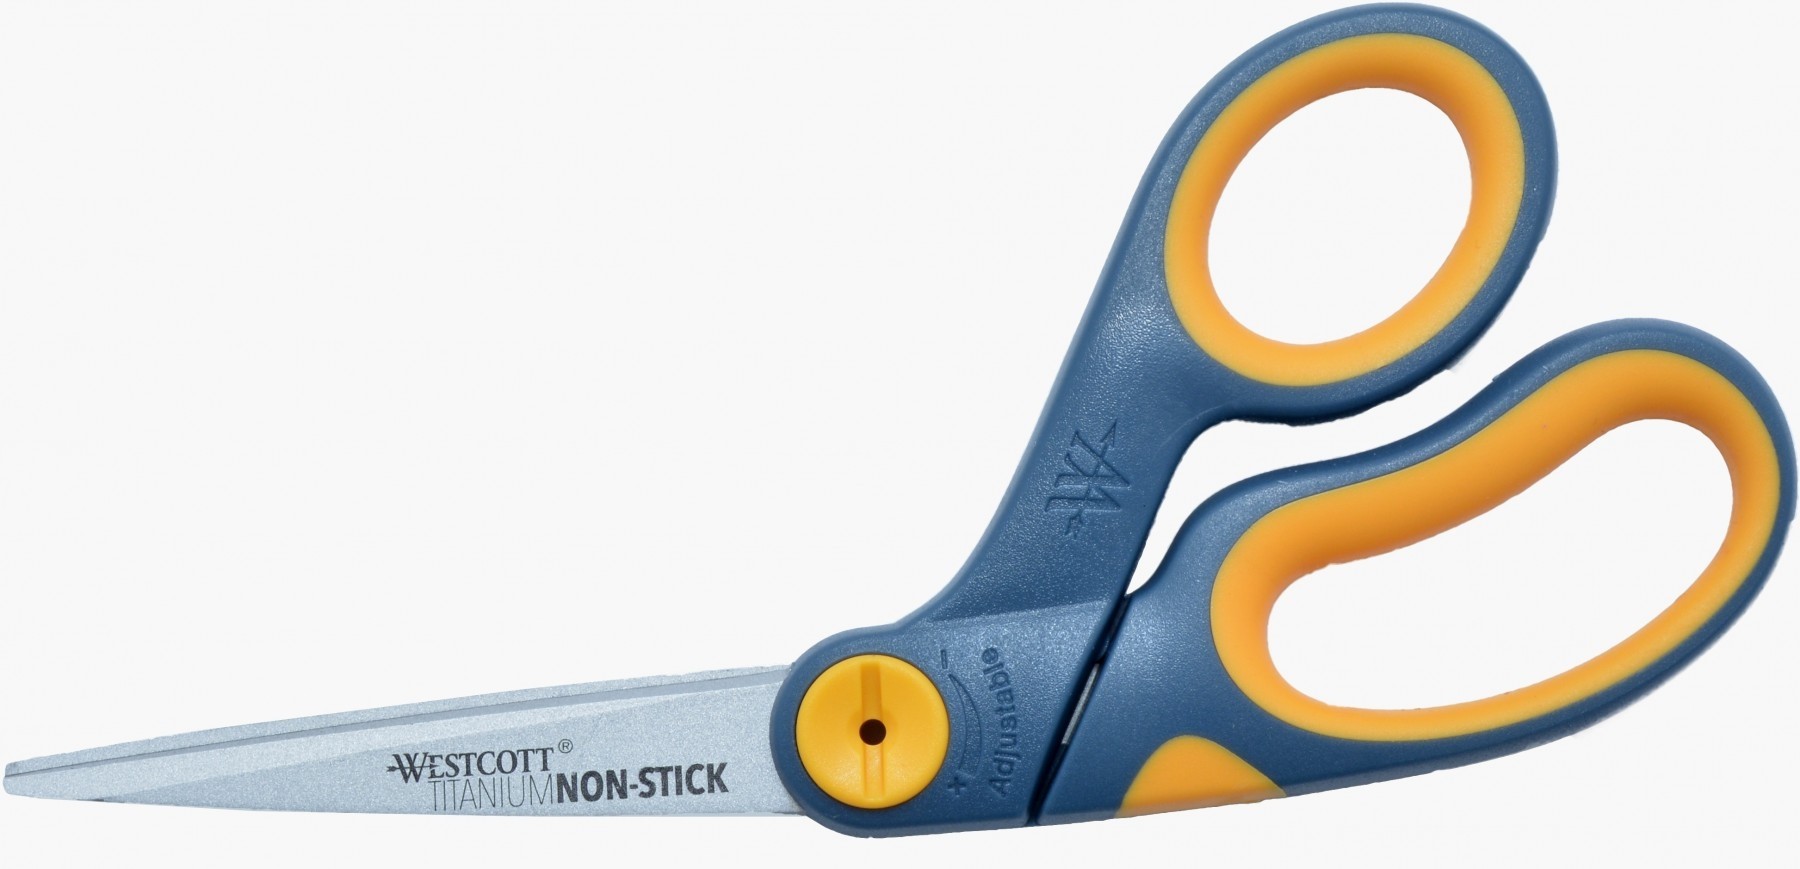 Westcott 8" Bent Titanium Bonded Non-Stick Scissors with Adjustable Glide Feature (14850)